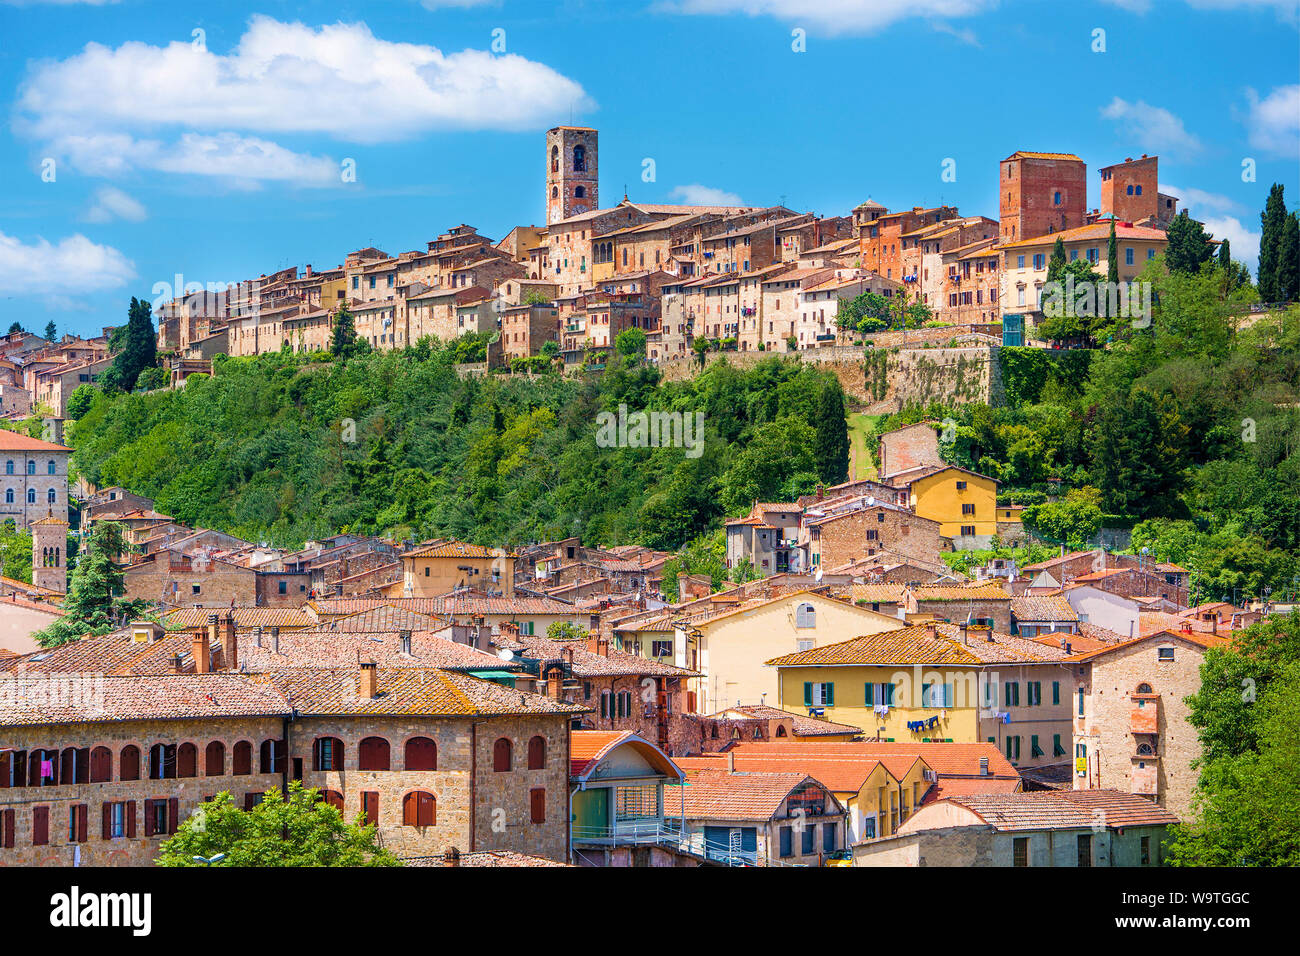 Colle di Val d'Elsa, Siena, Tuscany, Italy Stock Photo